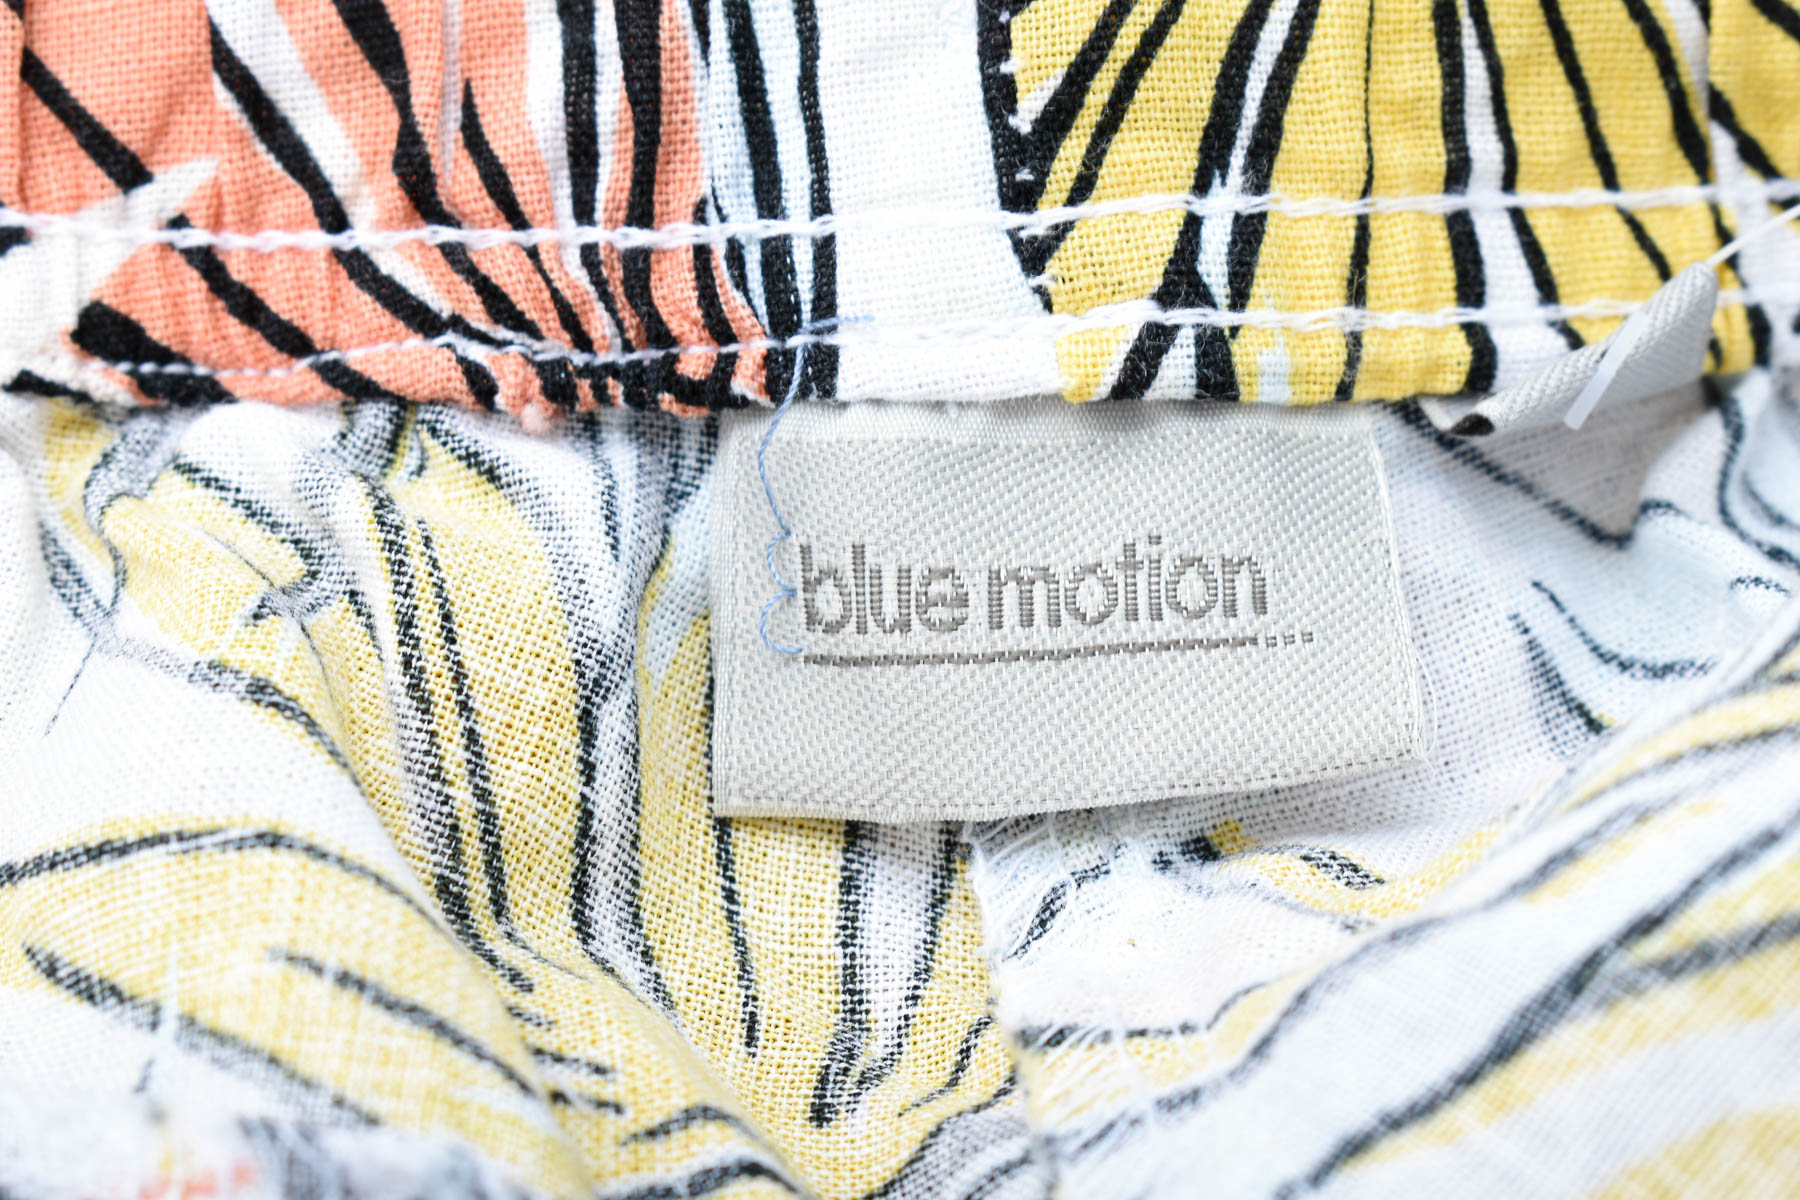 Pantaloni de damă - Blue Motion - 2